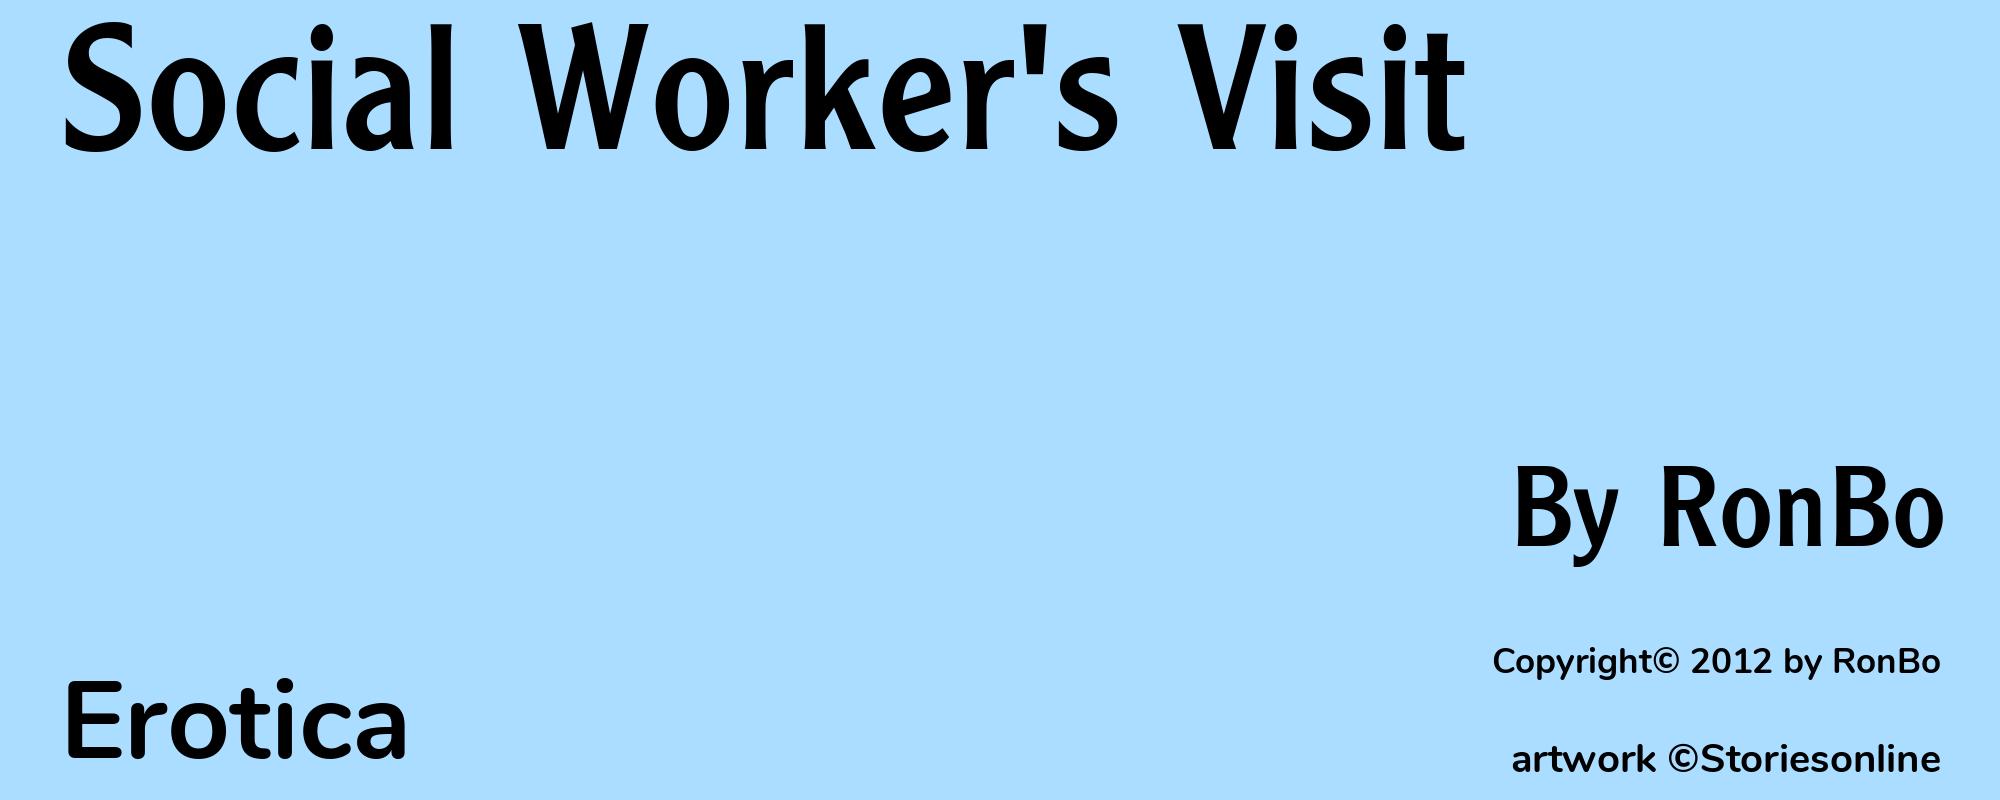 Social Worker's Visit - Cover